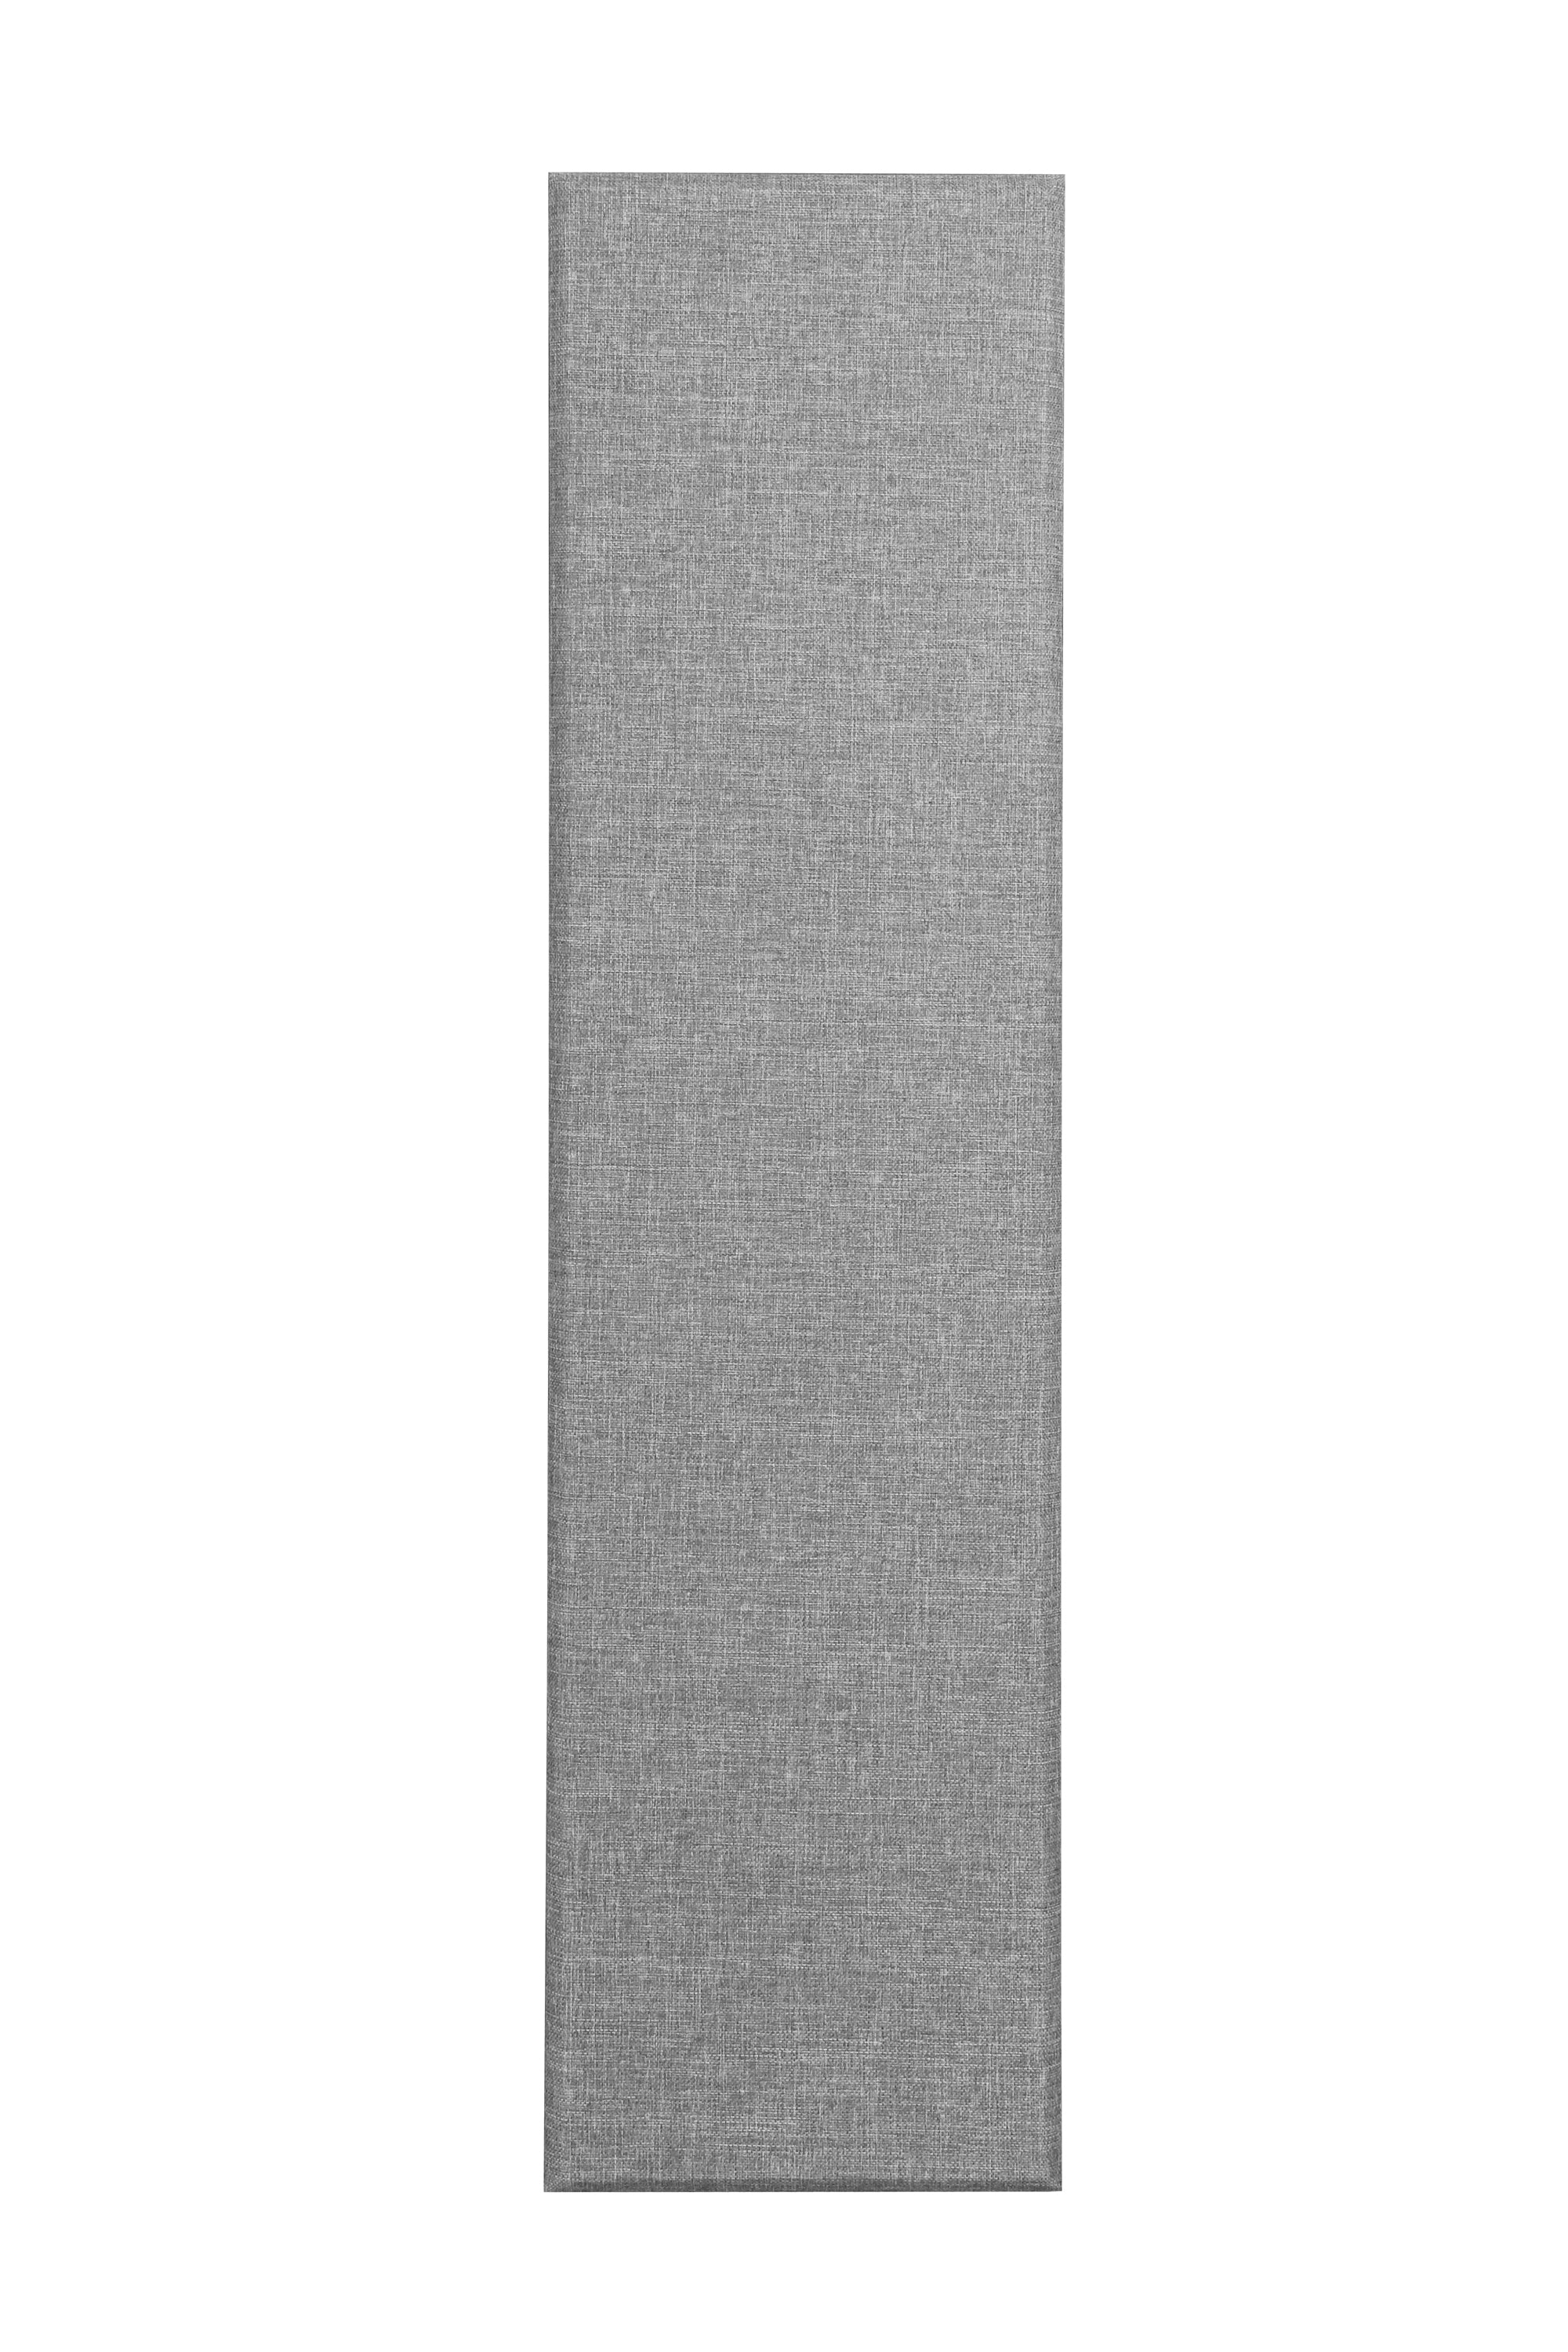 Primacoustic Broadway Acoustic Control Column Panel, 12-Pack (12 x 48 x 1")